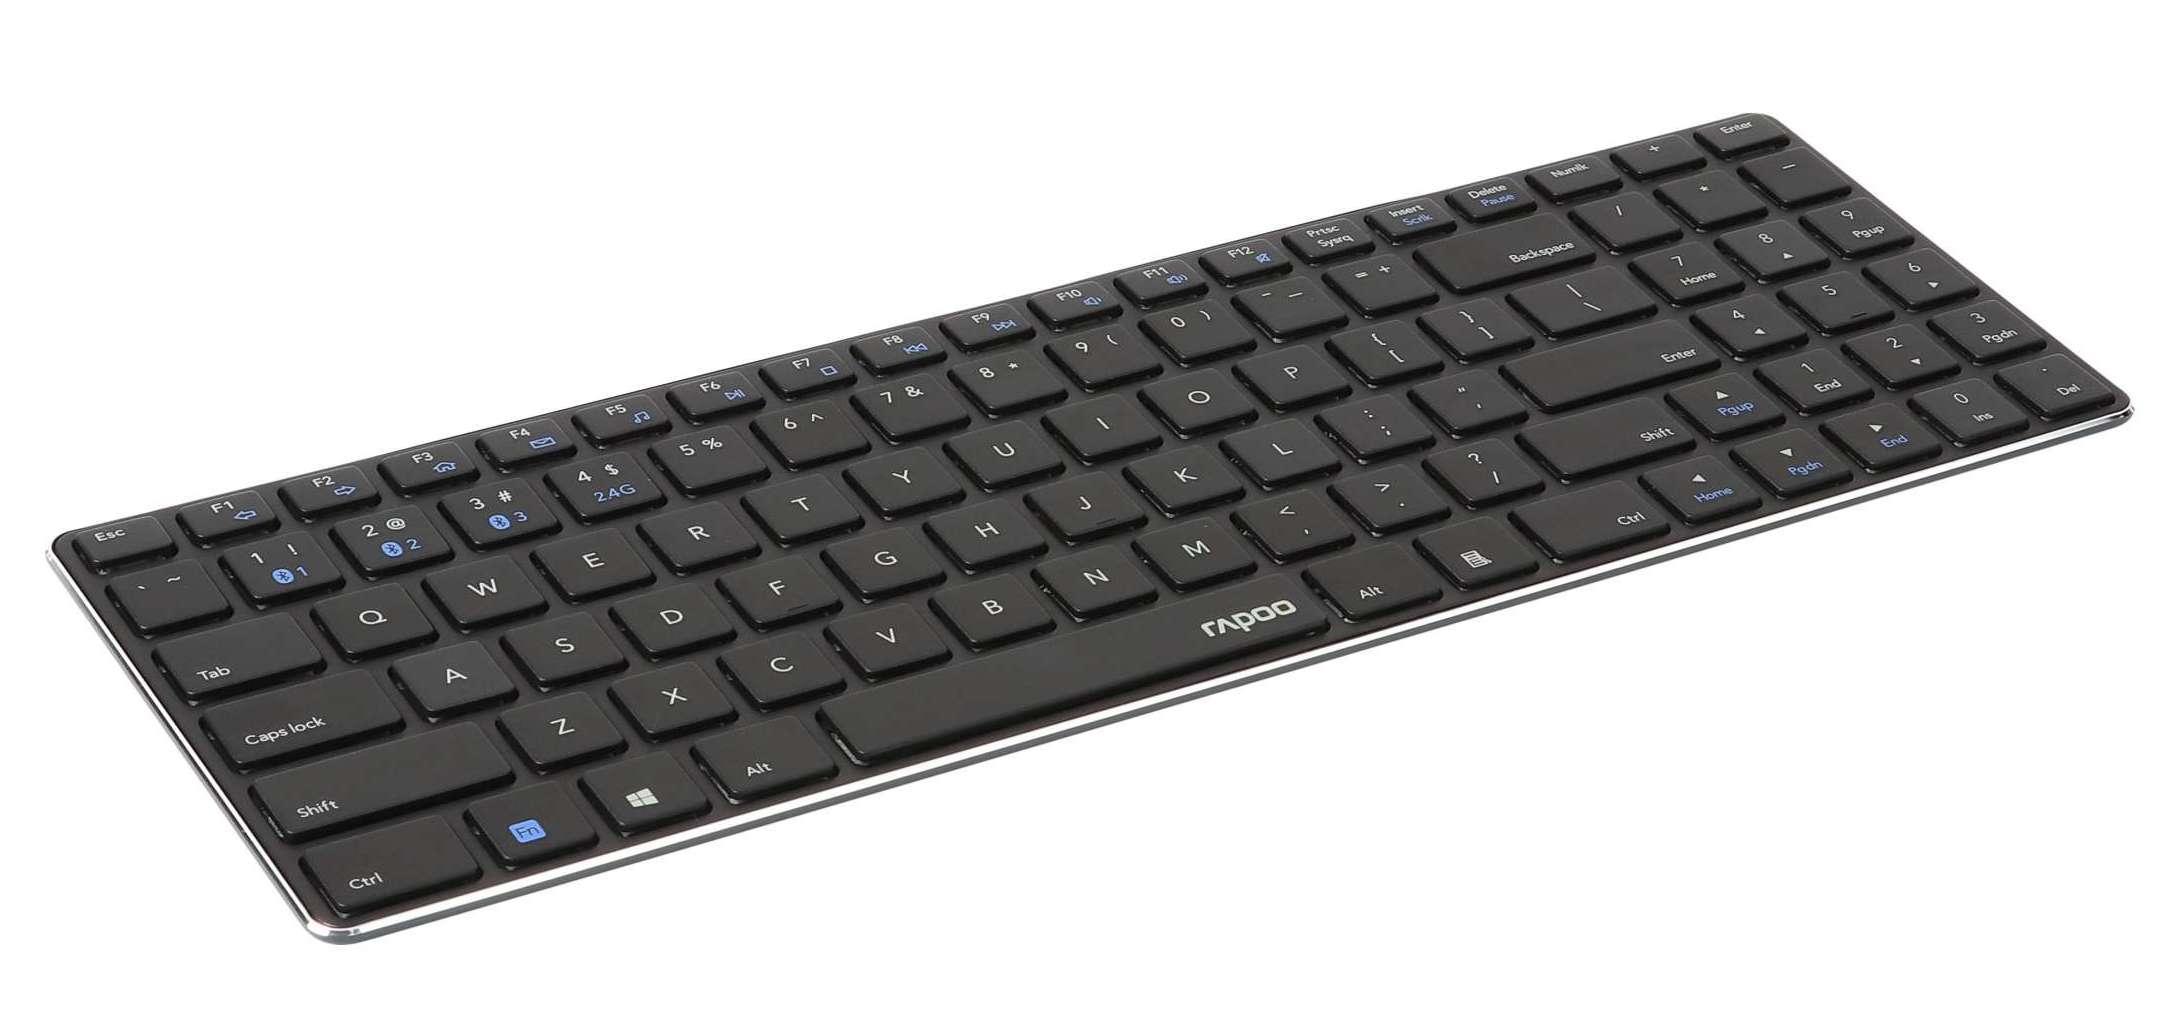 Rapoo E9100M - Best budget slimline keyboard